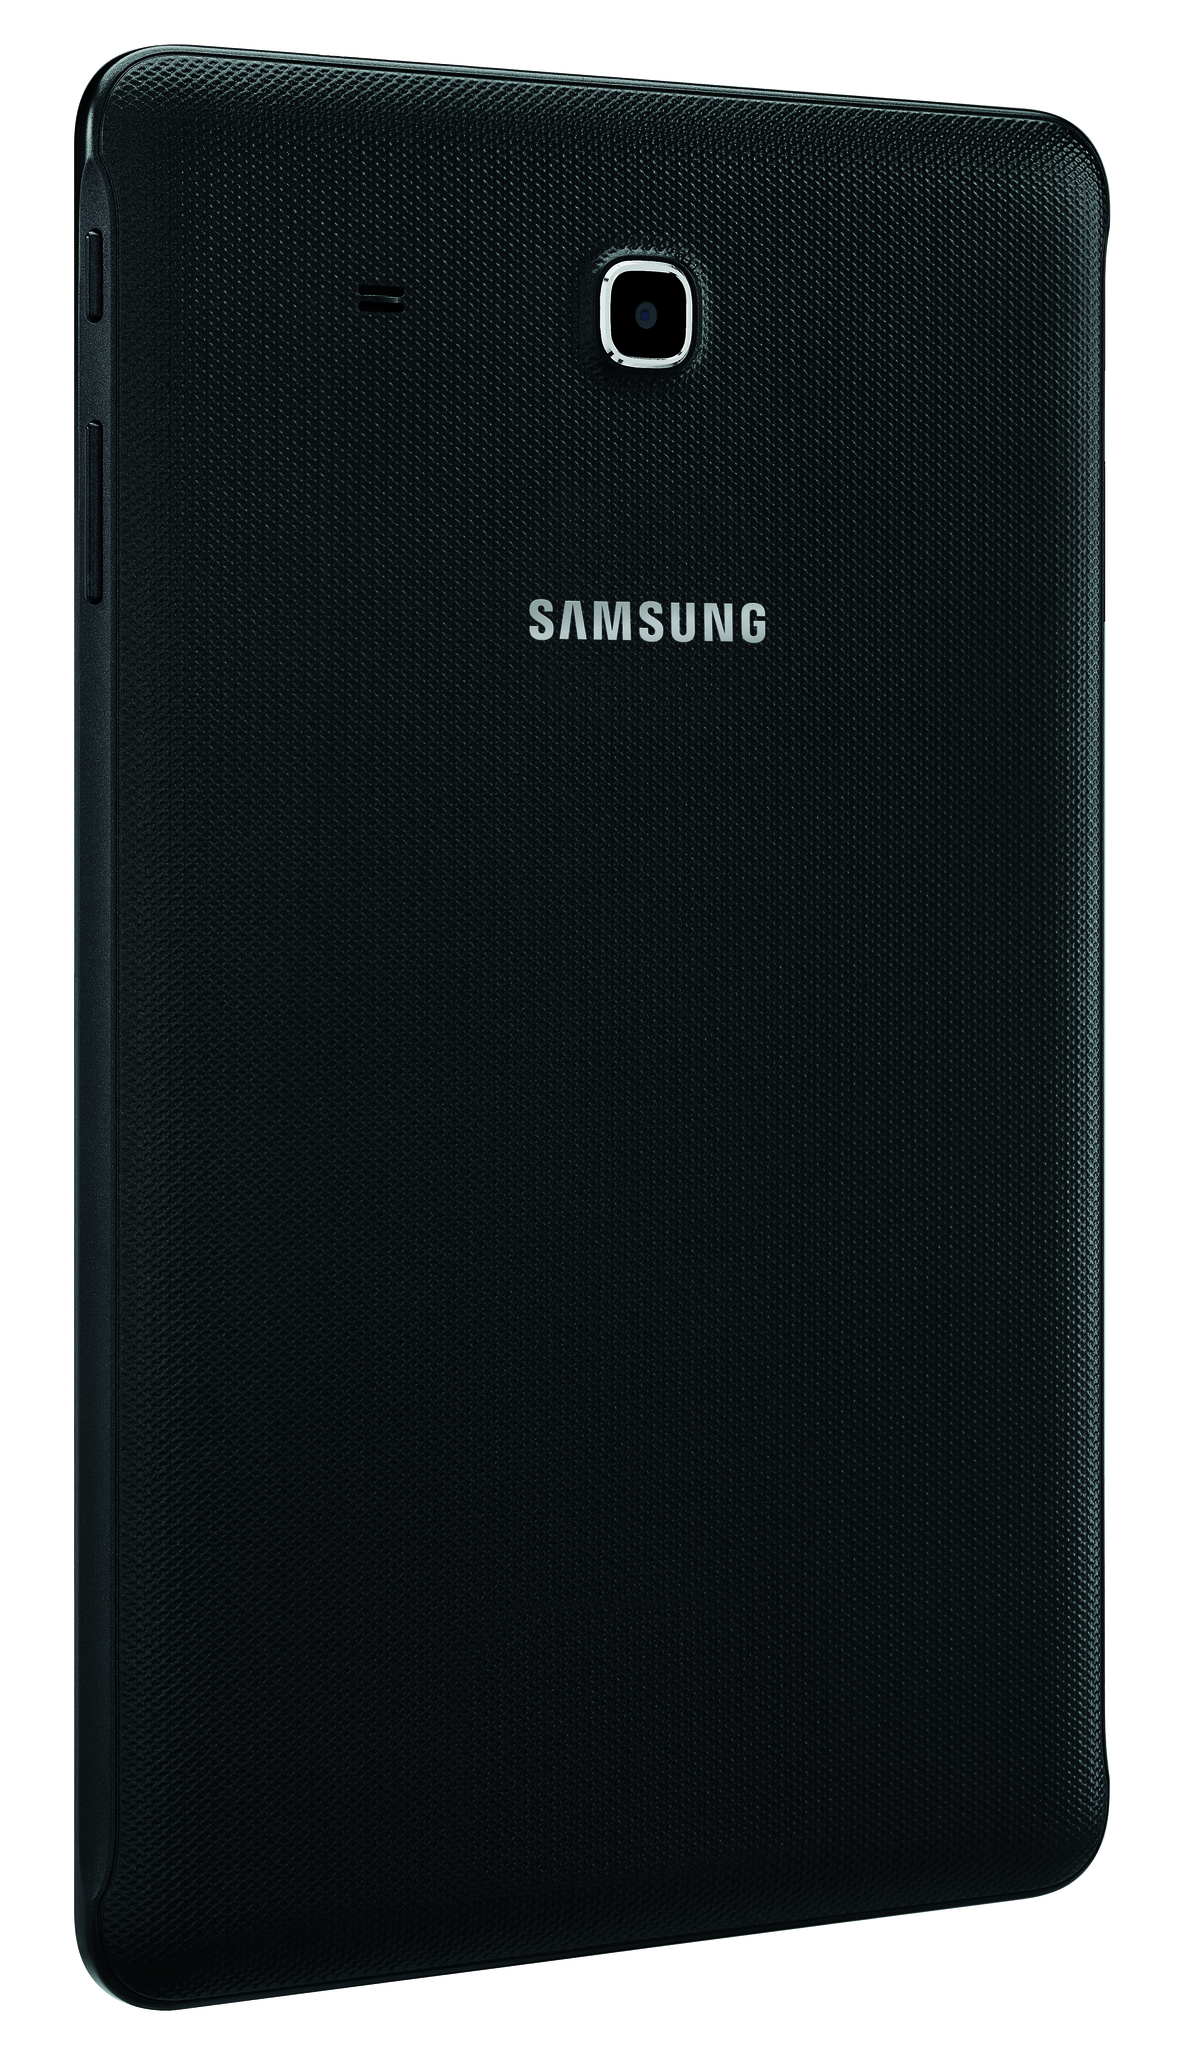 Samsung Galaxy Tab E 9.6 + $25 Google Play Card - image 4 of 9